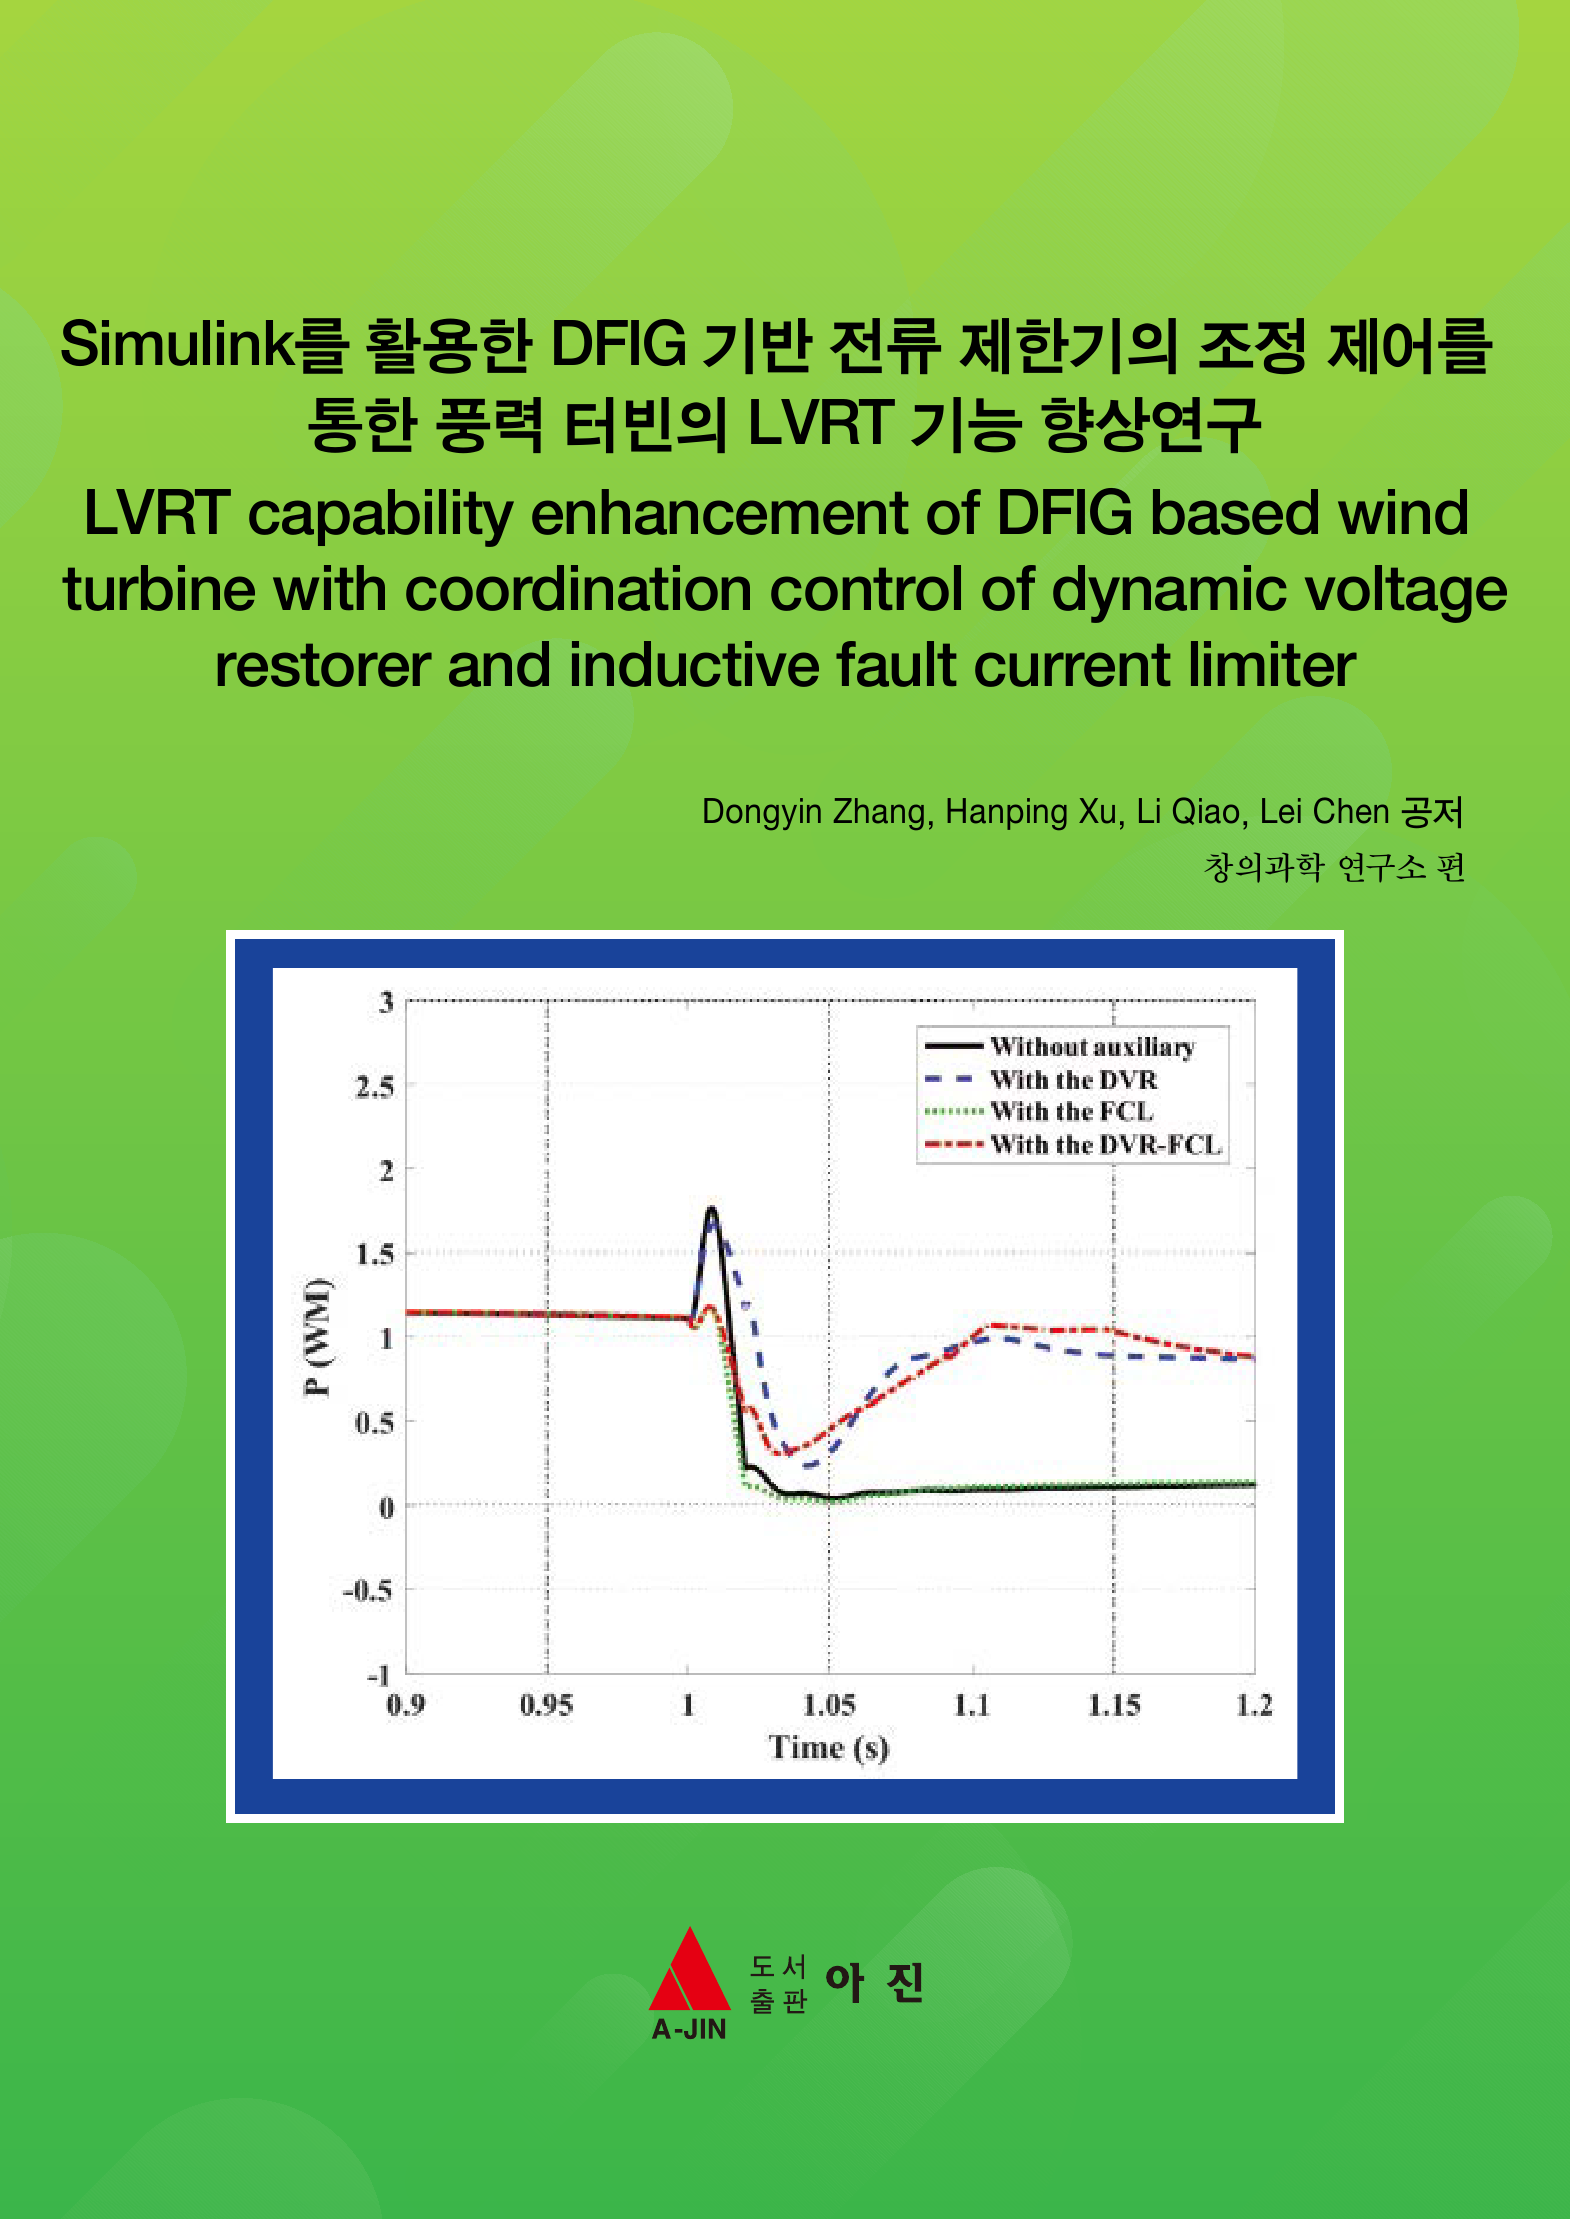 Simulink를 활용한 DFIG 기반 전류 제한기의 조정 제어를 통한 풍력 터빈의 LVRT 기능 향상연구(LVRT capability enhancement of DFIG based wind turbine with coordination control of dynamic voltage restorer and inductive fault current)